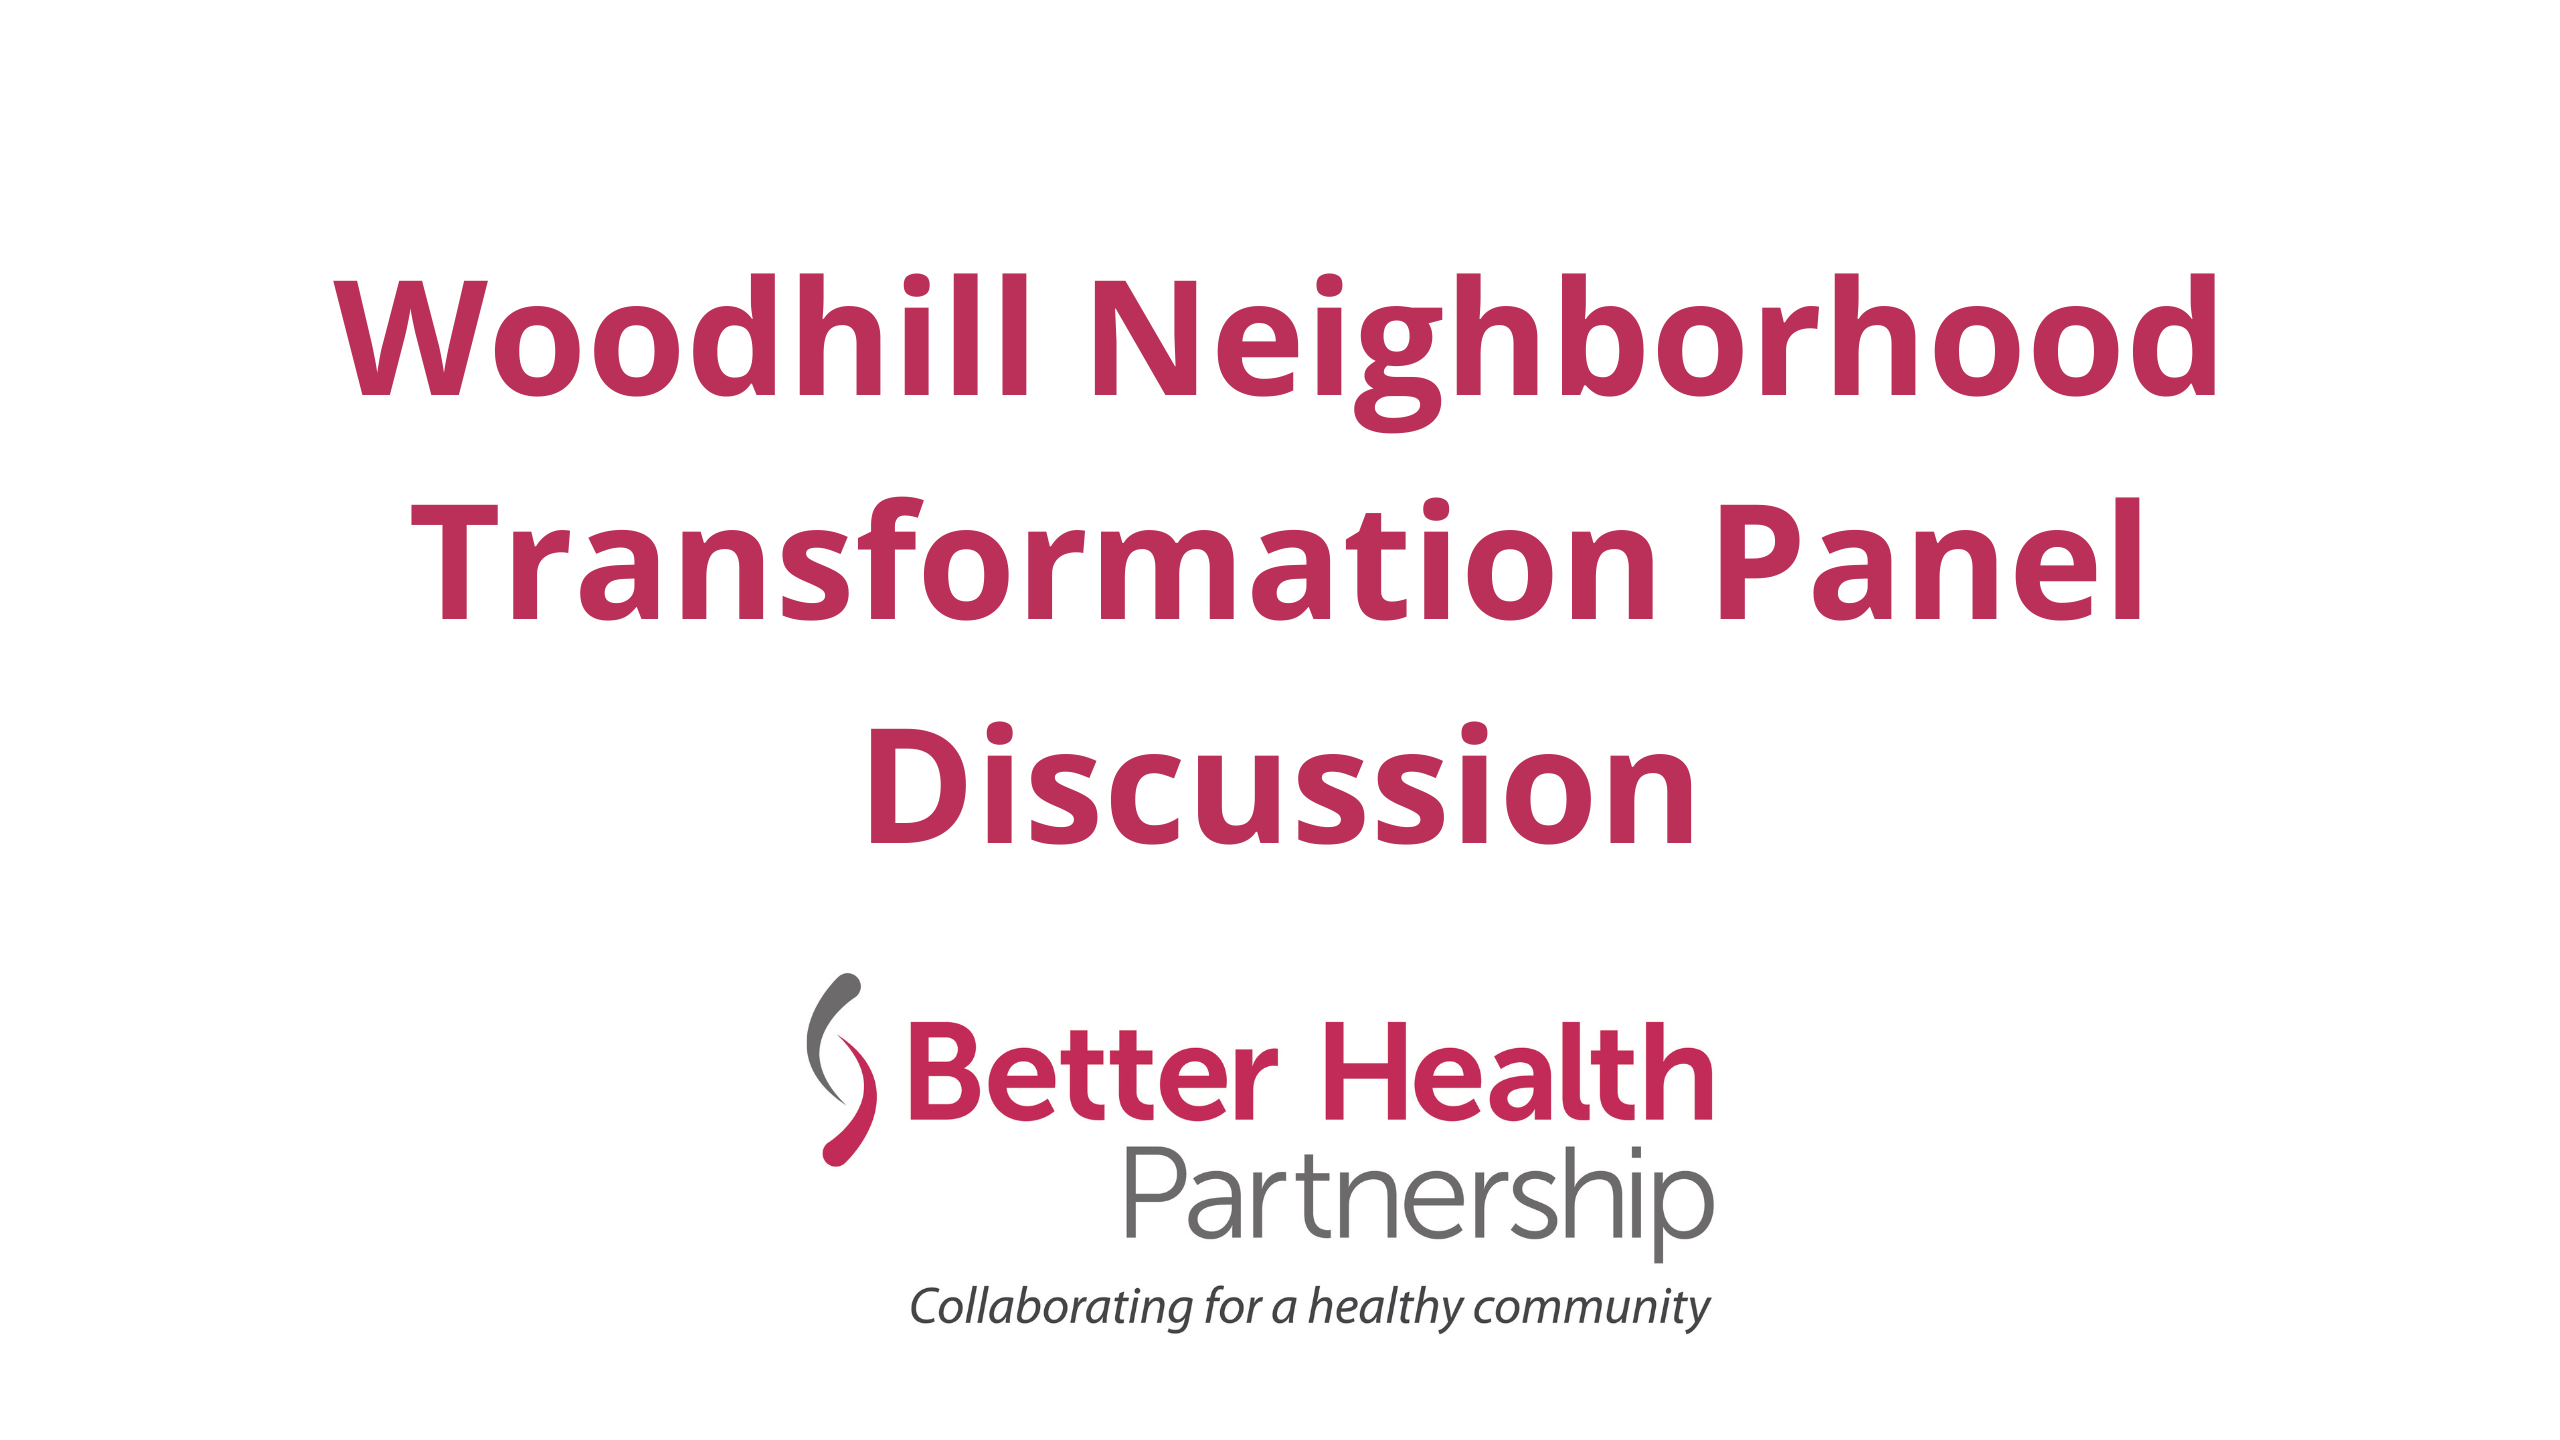 Woodhill Neighborhood Transformation Panel Discussion